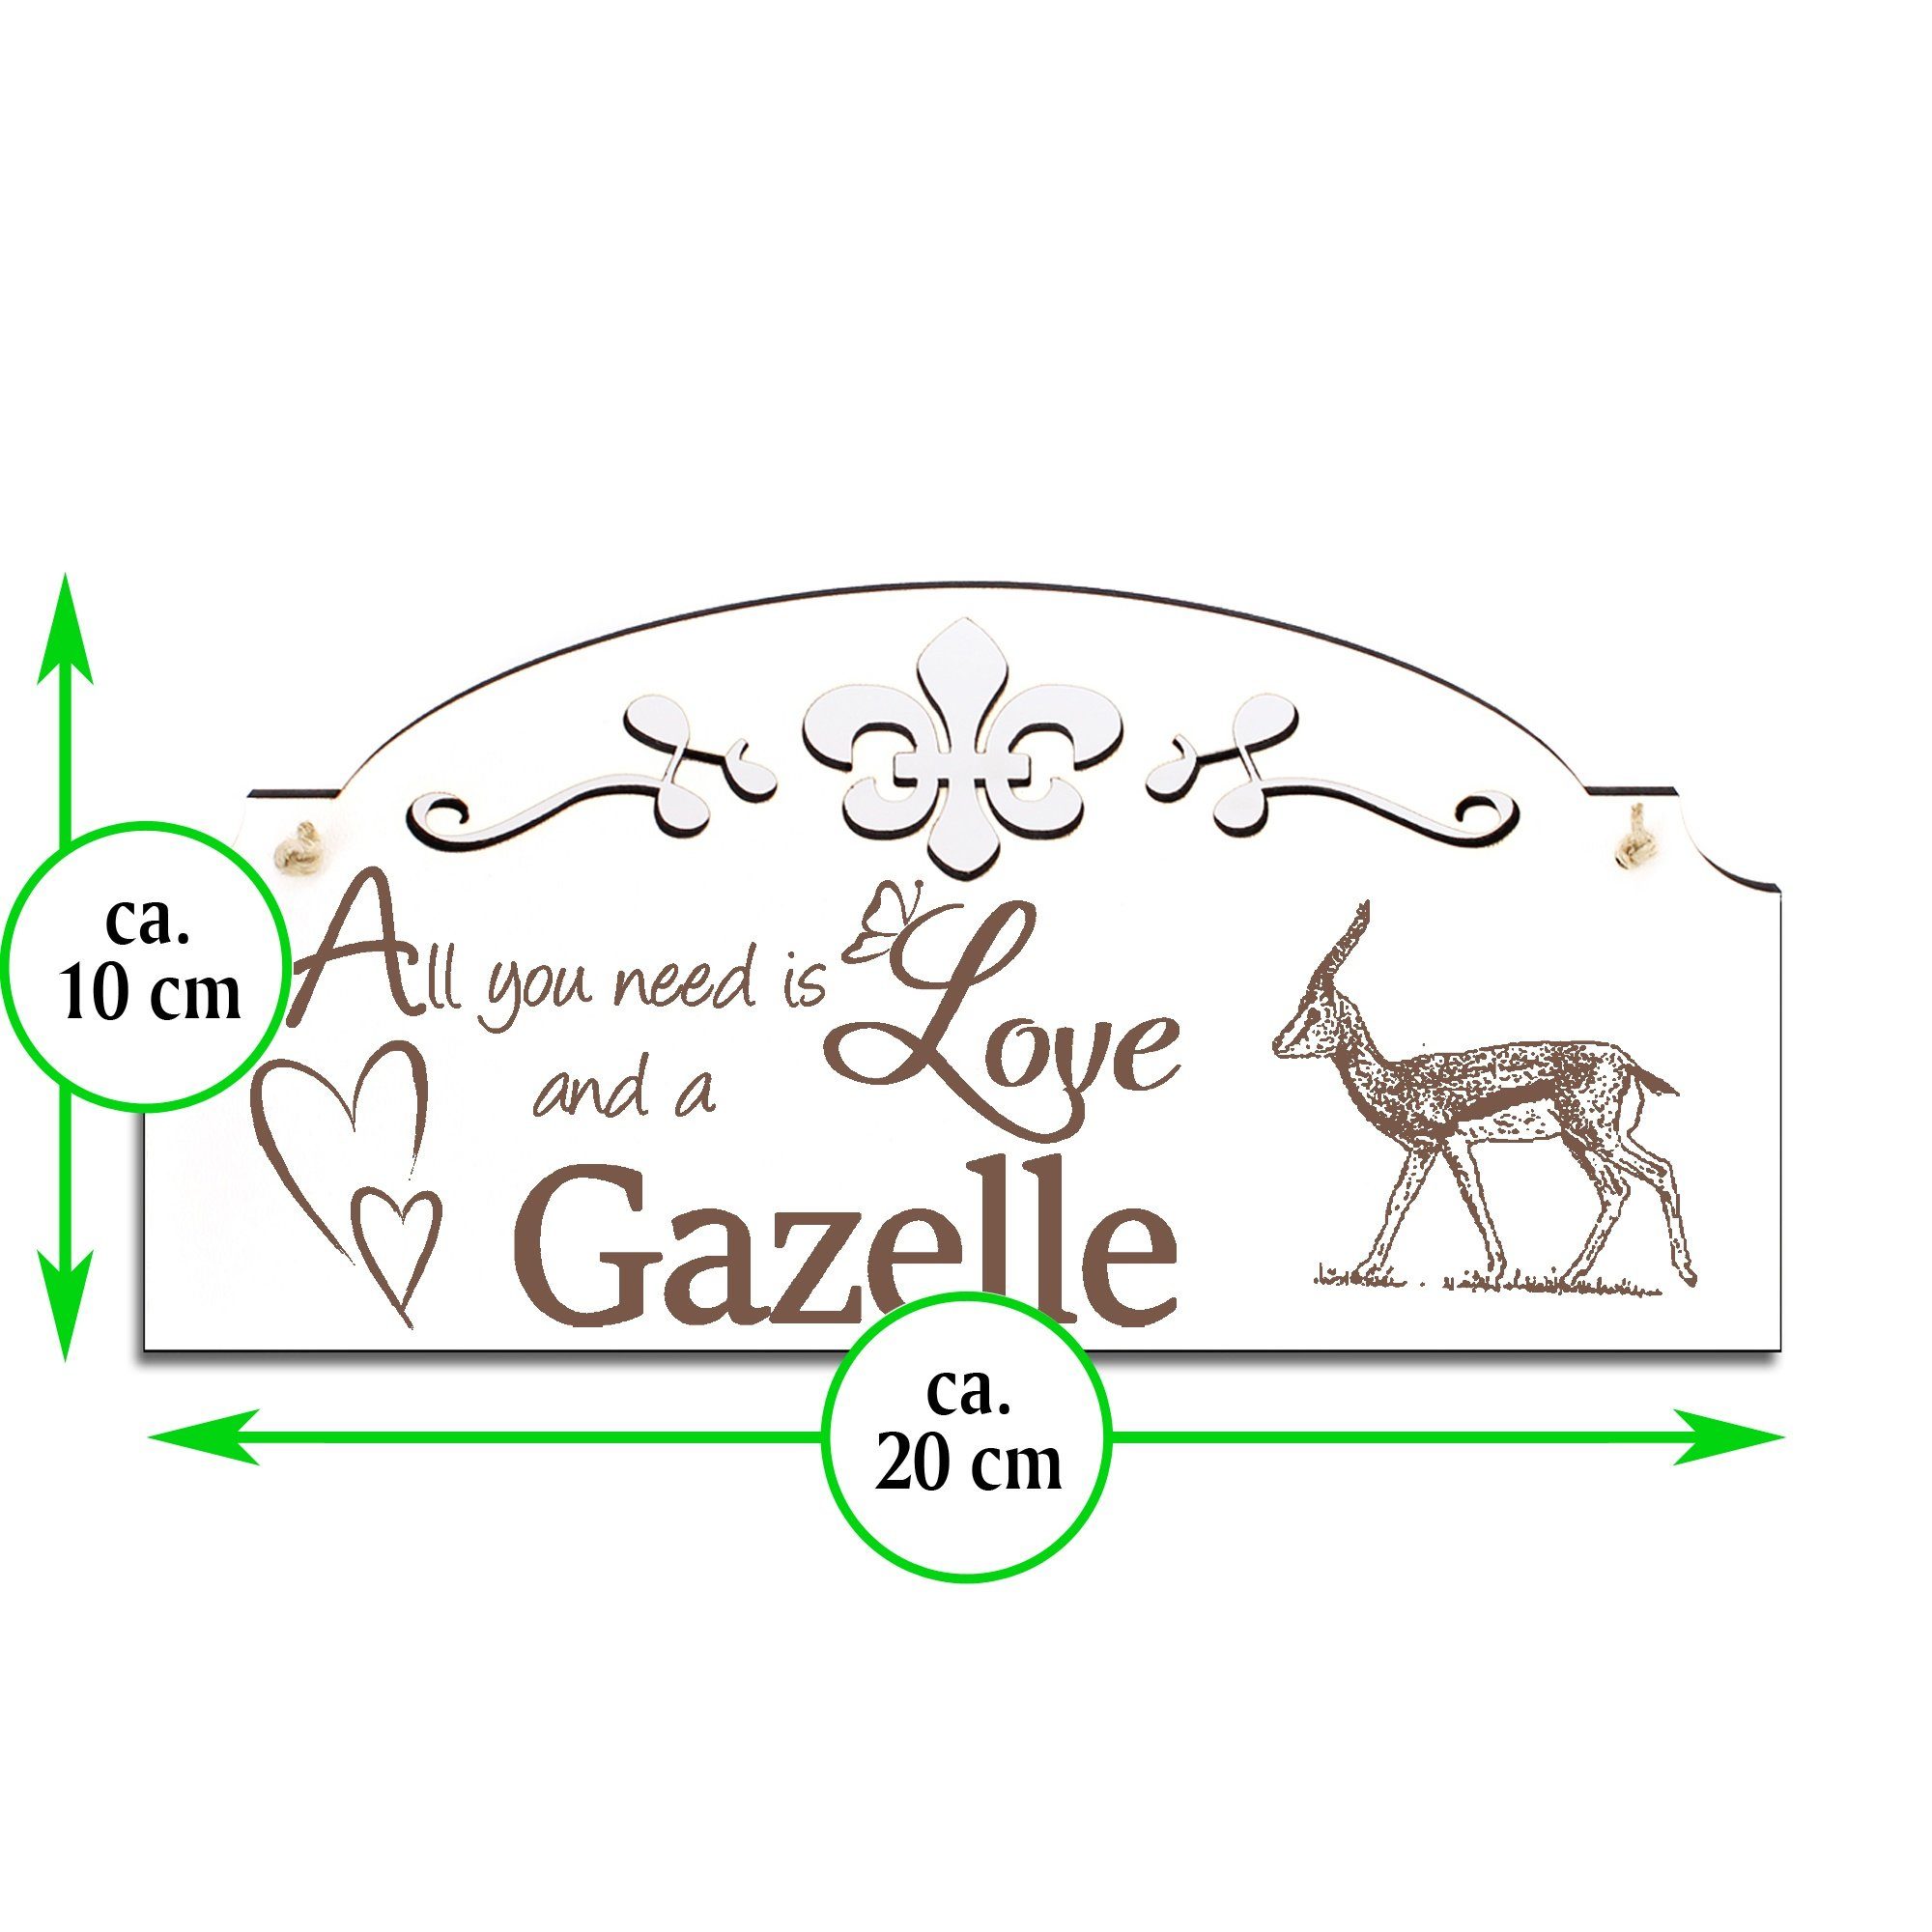 Gazelle need Love is you 20x10cm Dekolando All Hängedekoration Deko